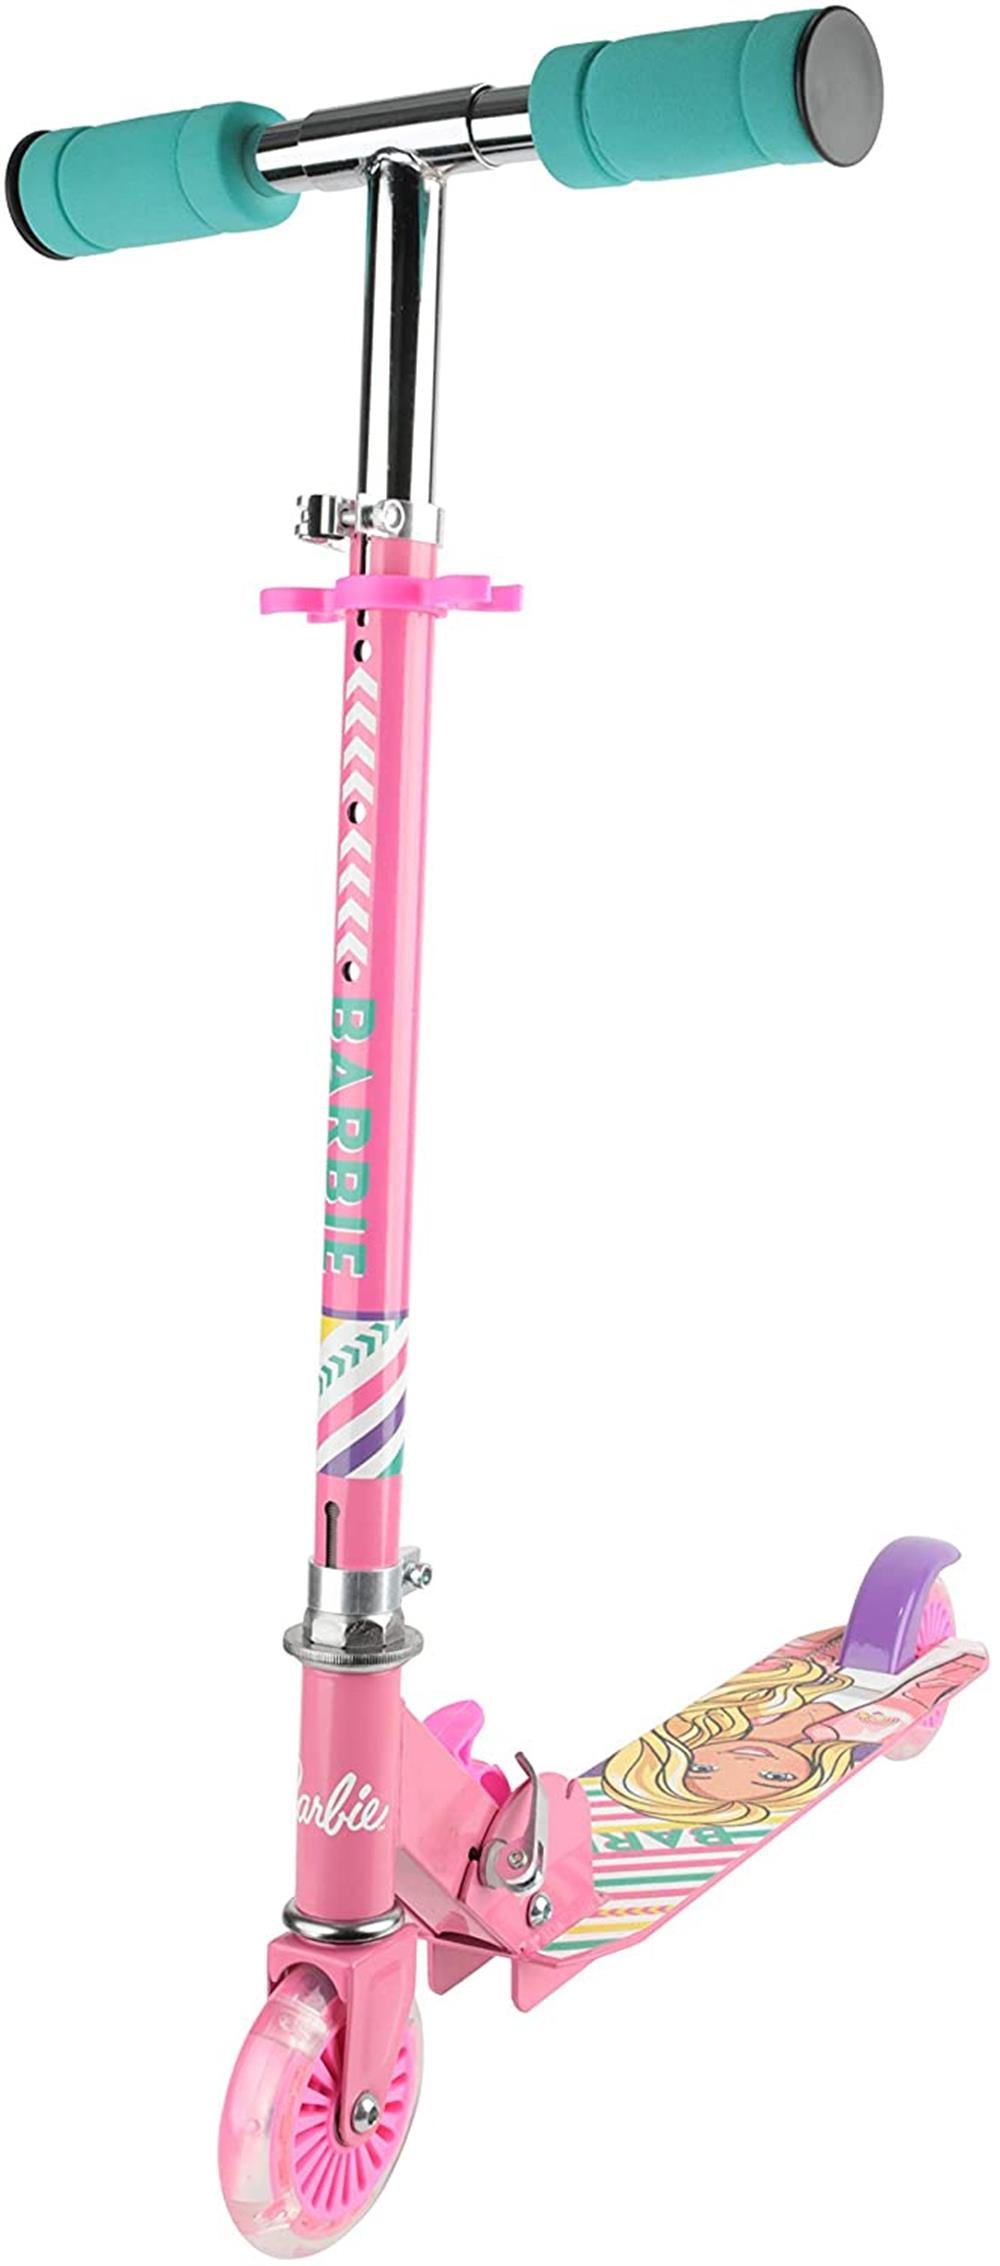 Barbie Light Up 2-Wheel Scooter